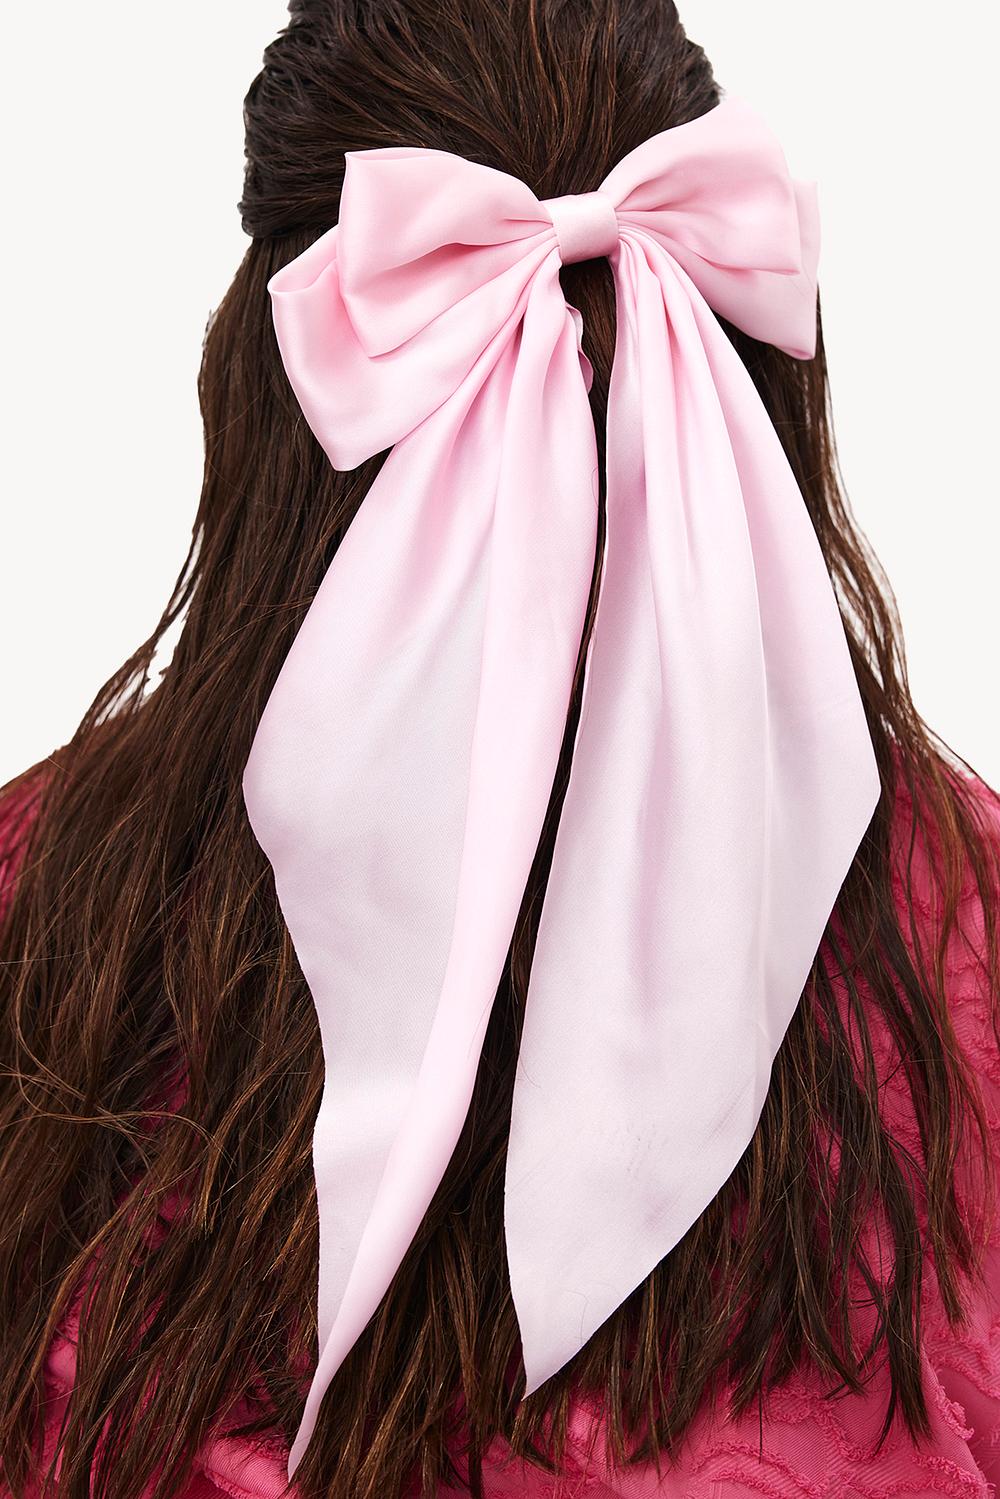 Pink bow hair clip